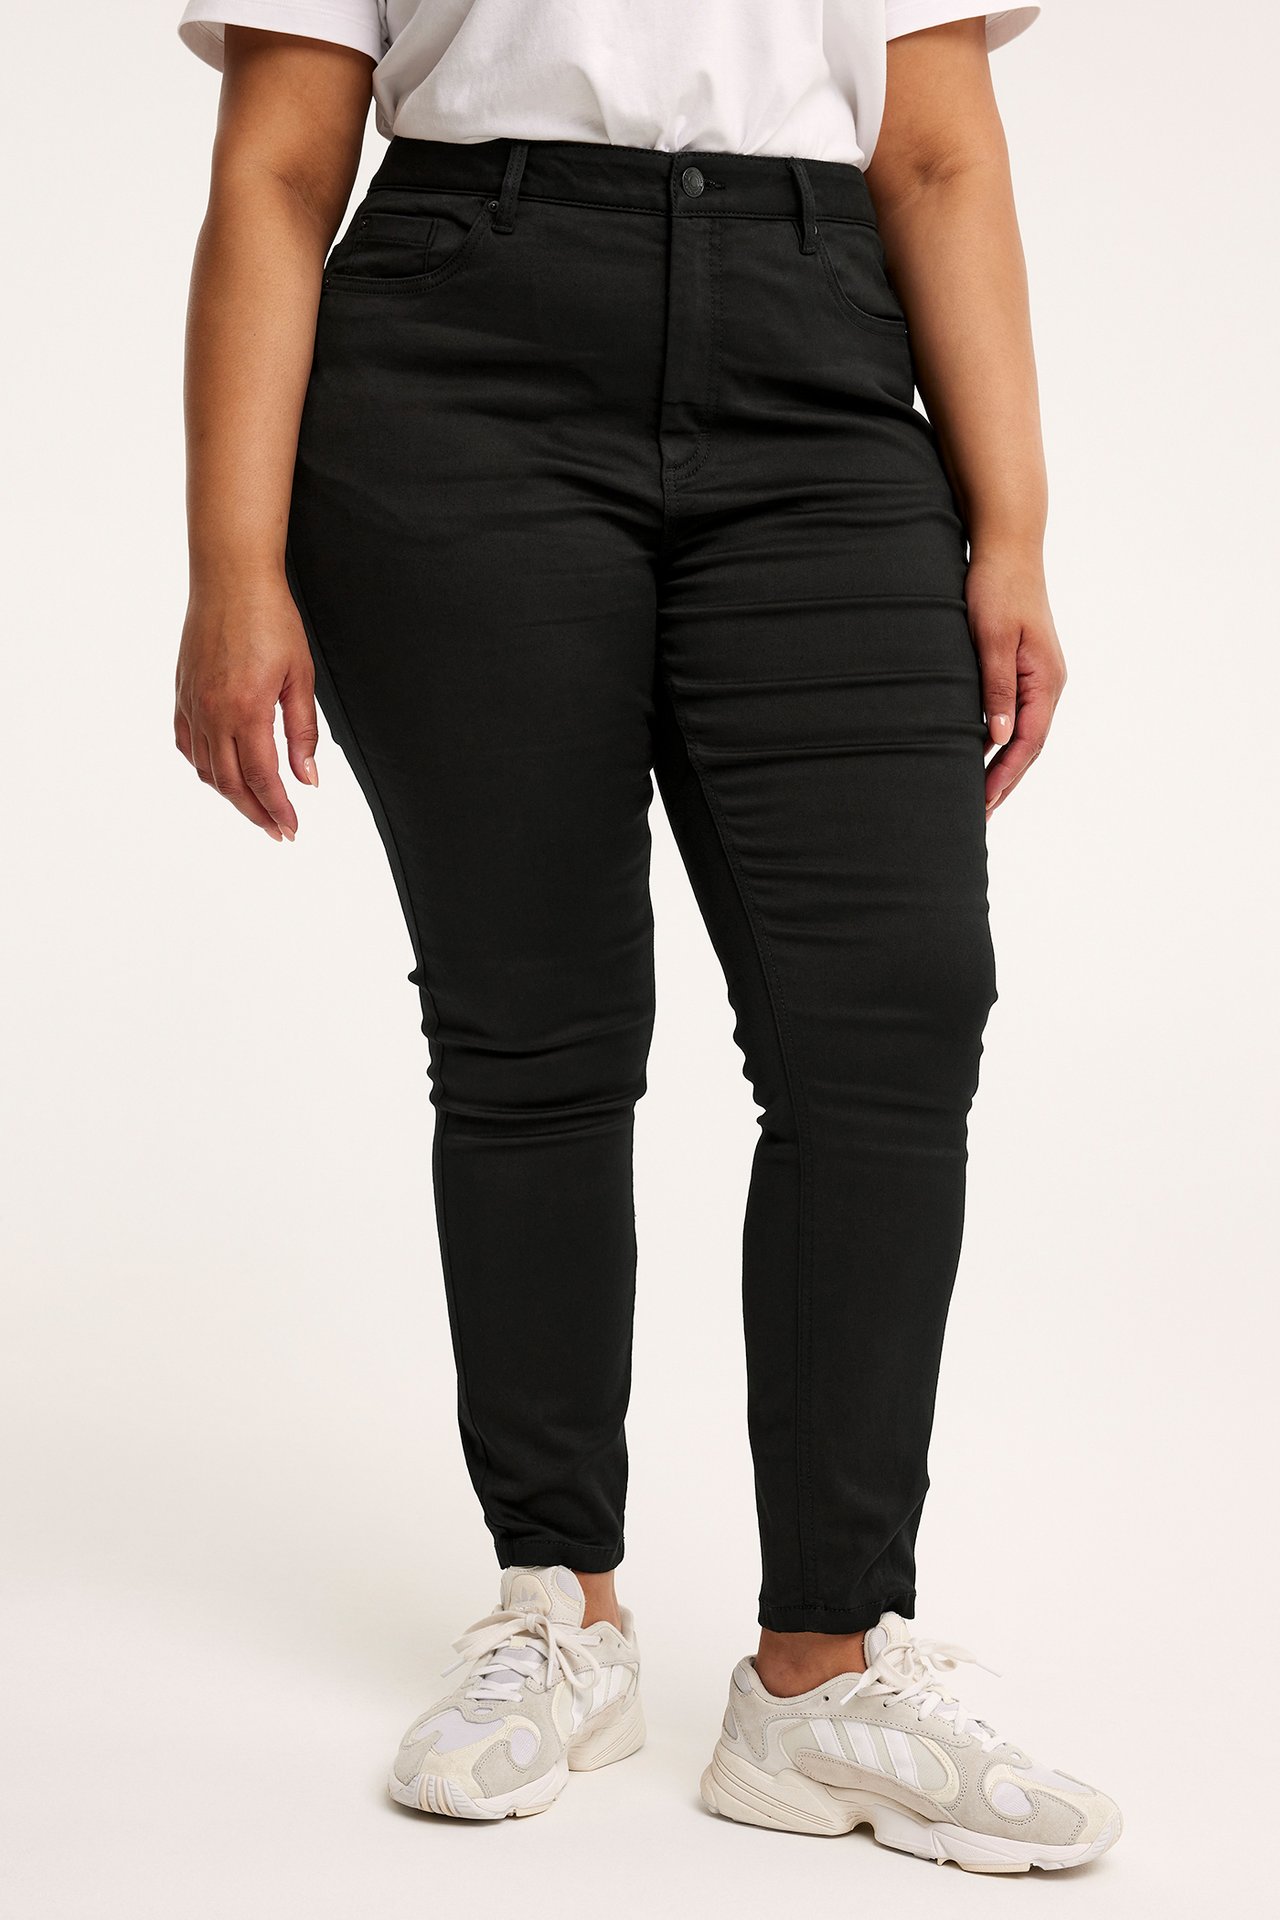 Ebba slim jeans short leg - Musta - 172cm / Storlek: 50S - 2